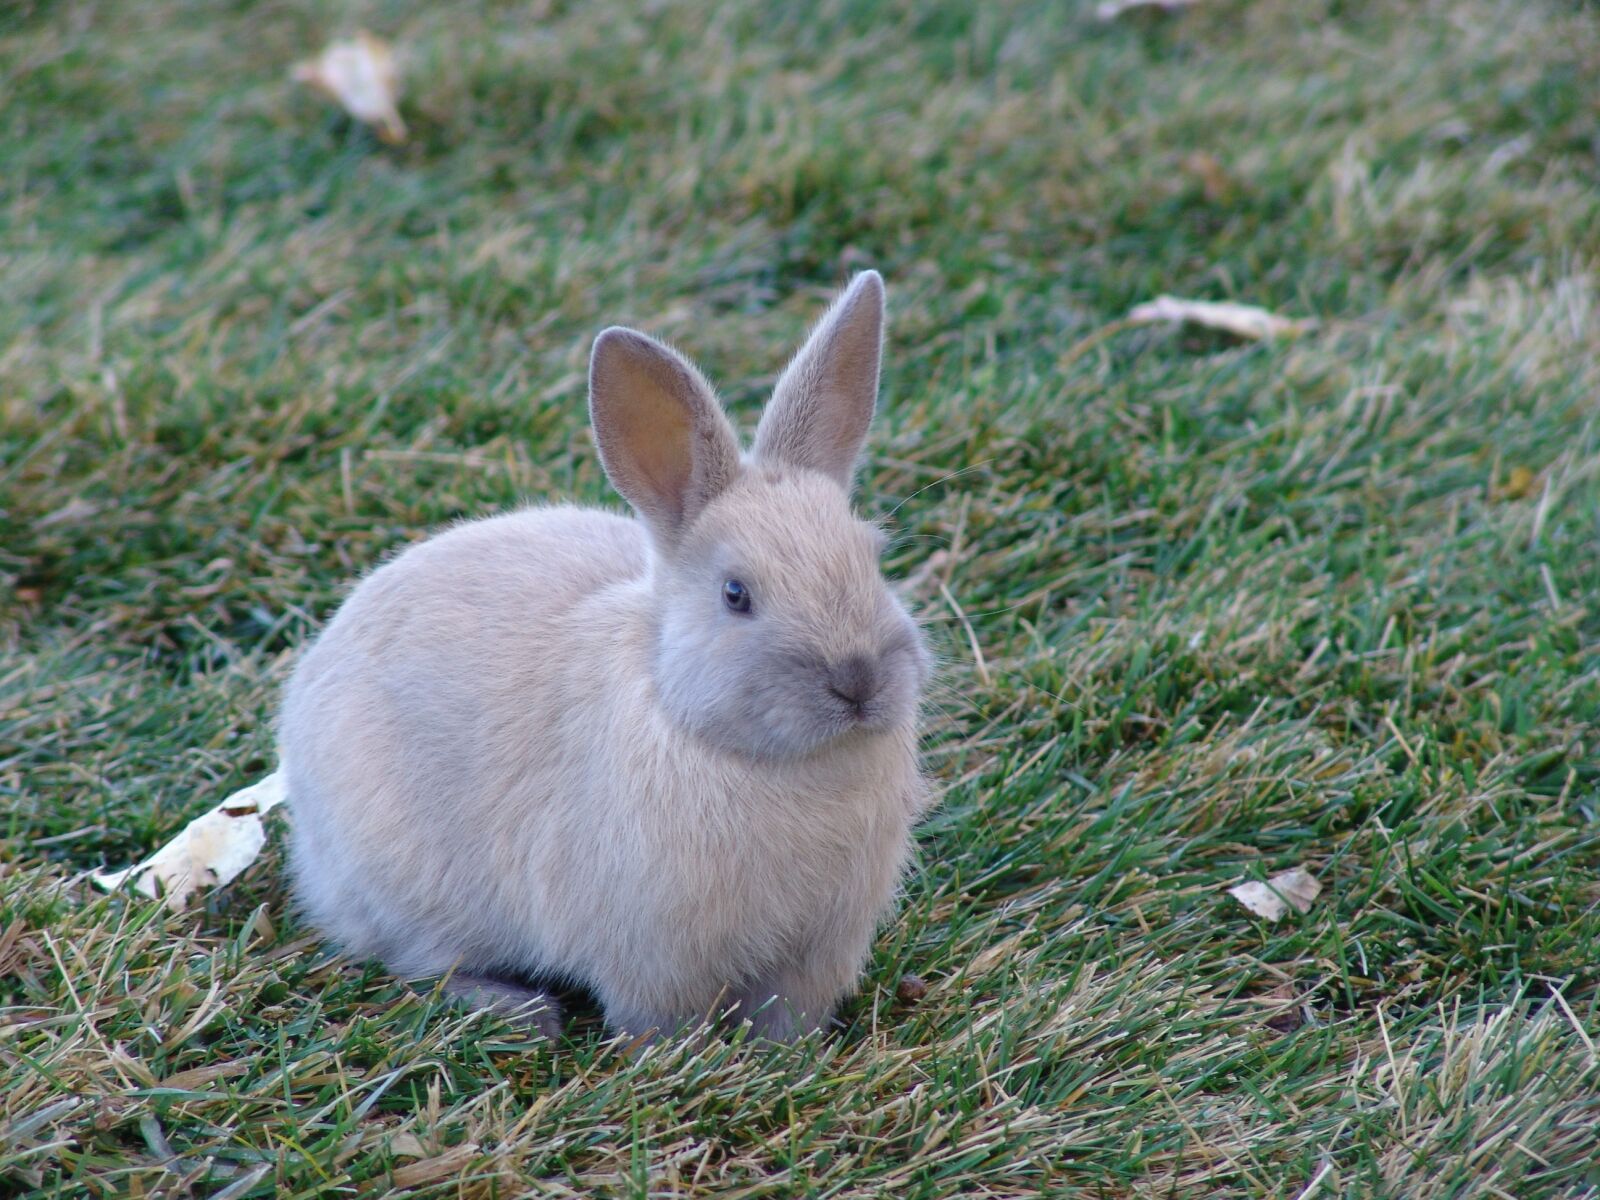 Sony DSC-F828 sample photo. Rabbit, grass, cute photography